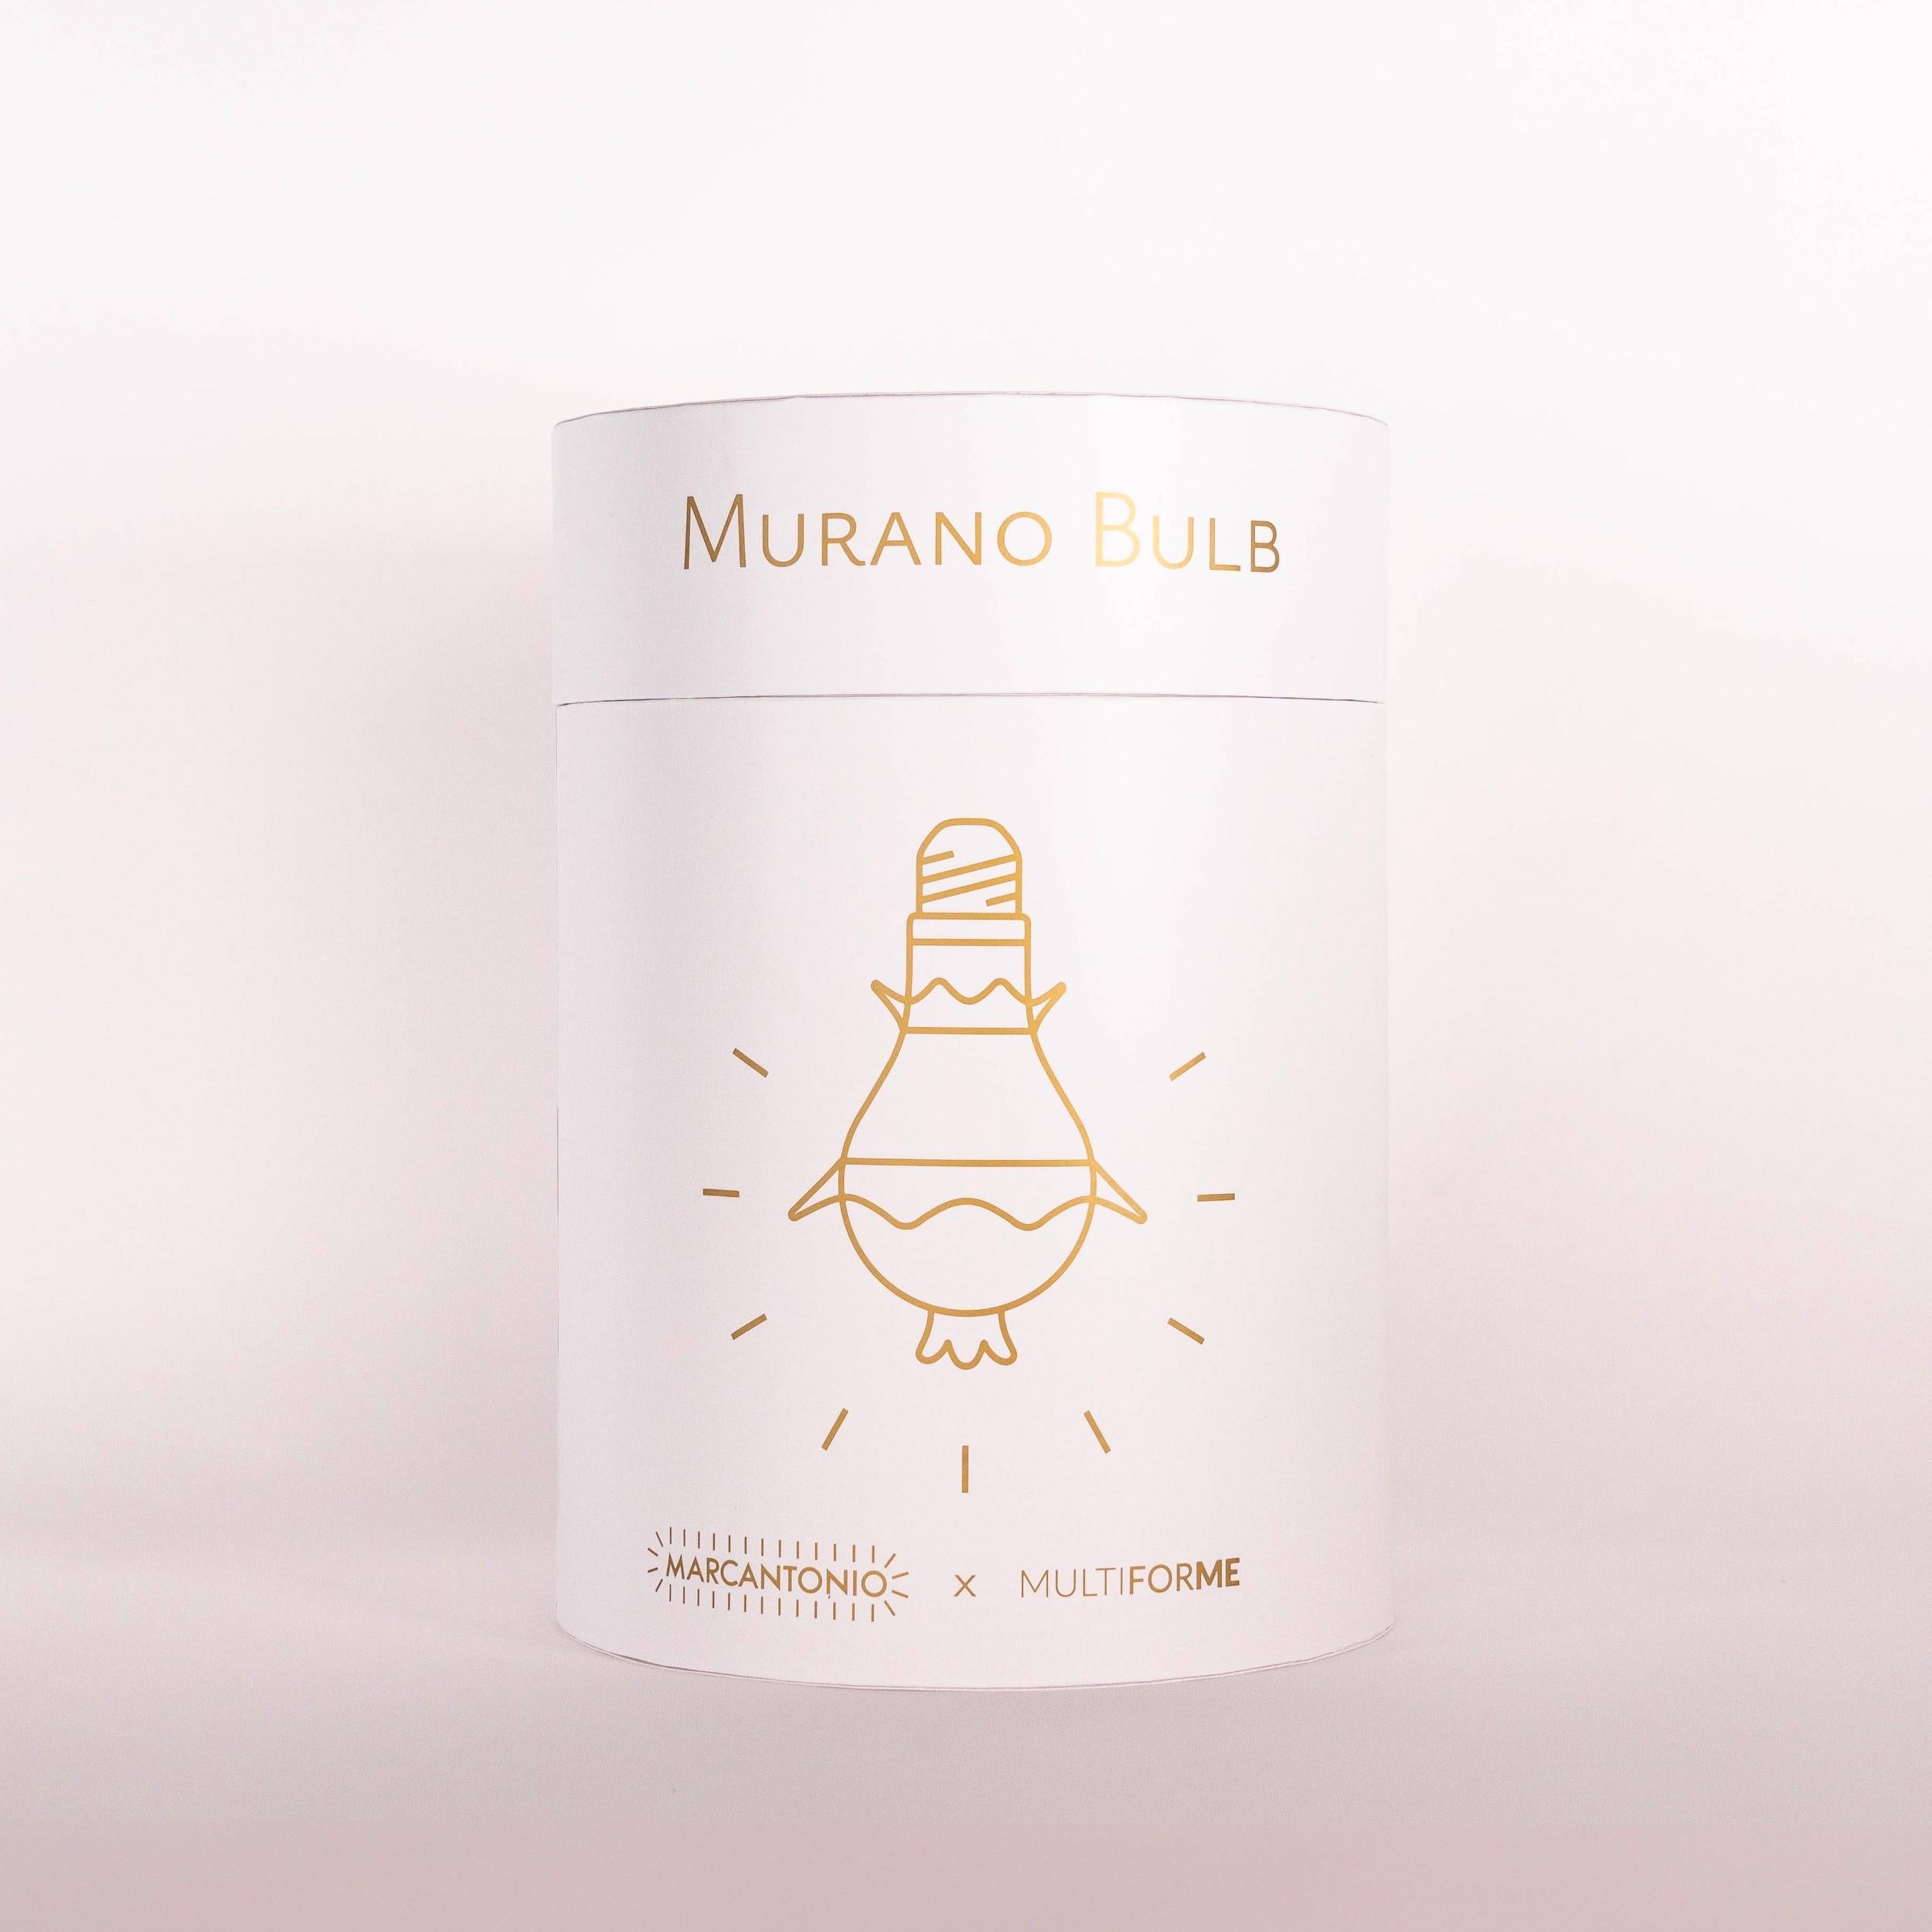 Artistic glass lightbulb chandelier Murano Bulb Marcantonio X Multiforme #11 For Sale 4